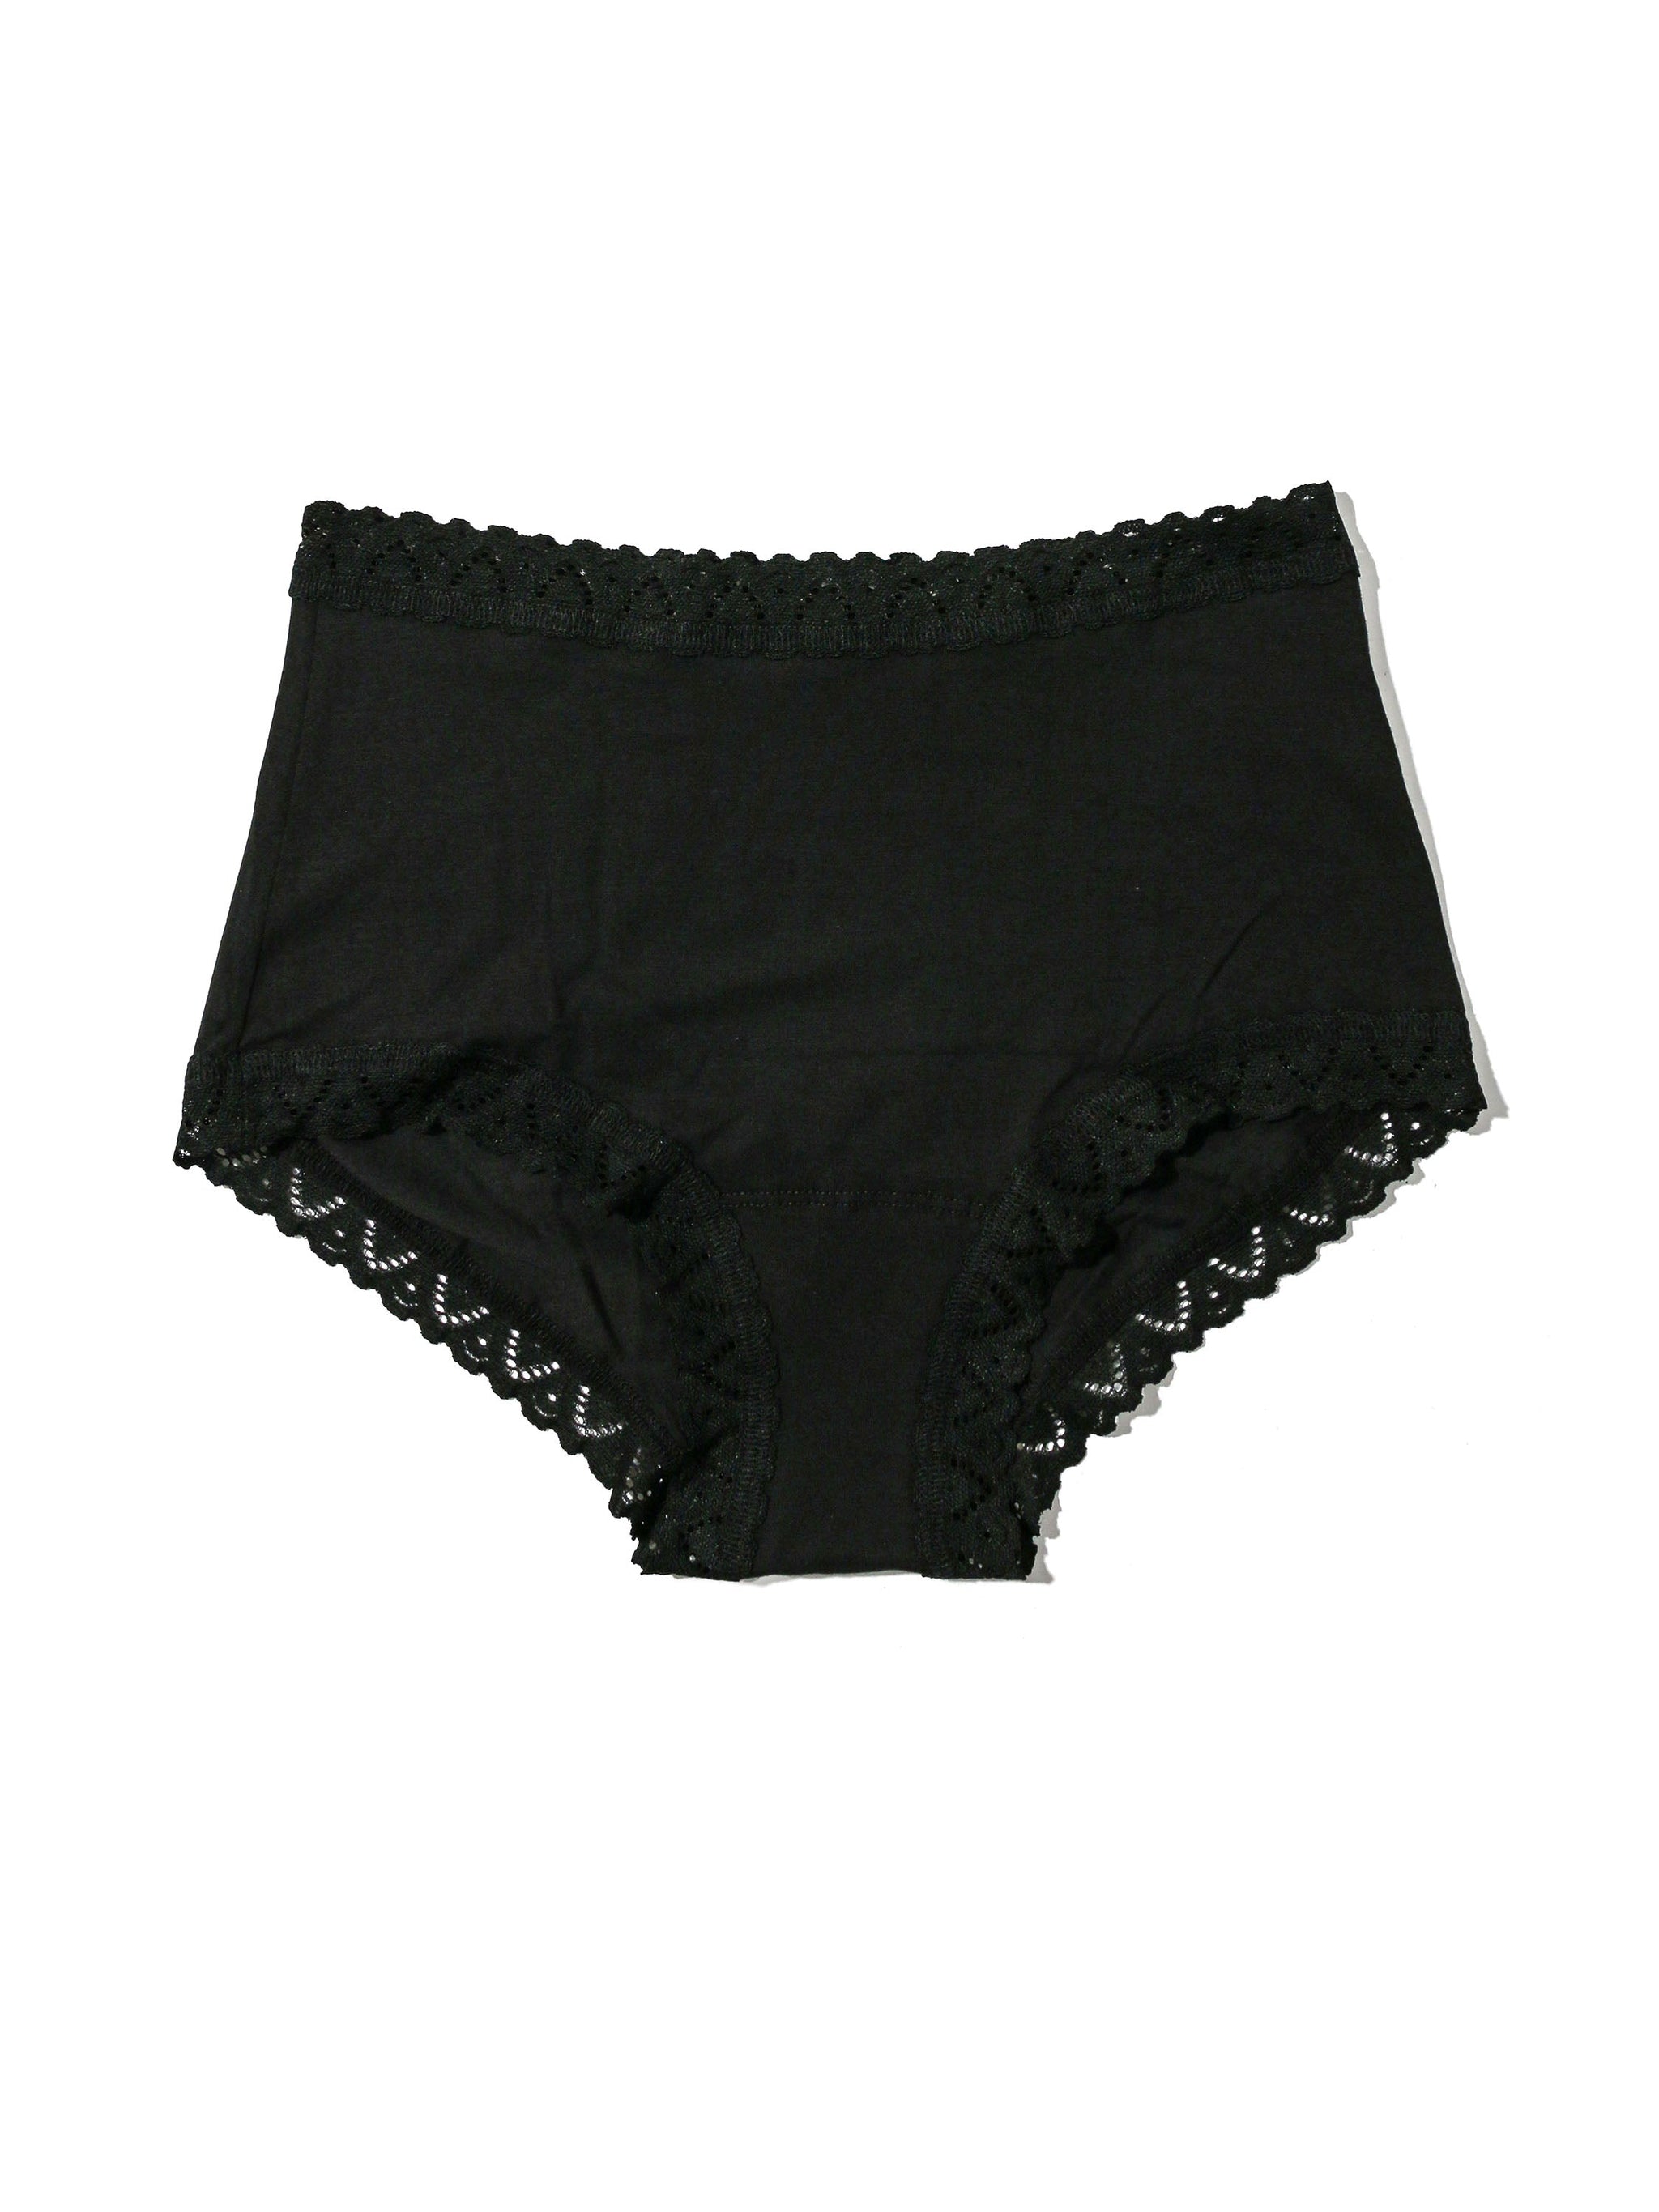 Buy Pitsra Bra Panty Cotton Paded (30) Red Black at